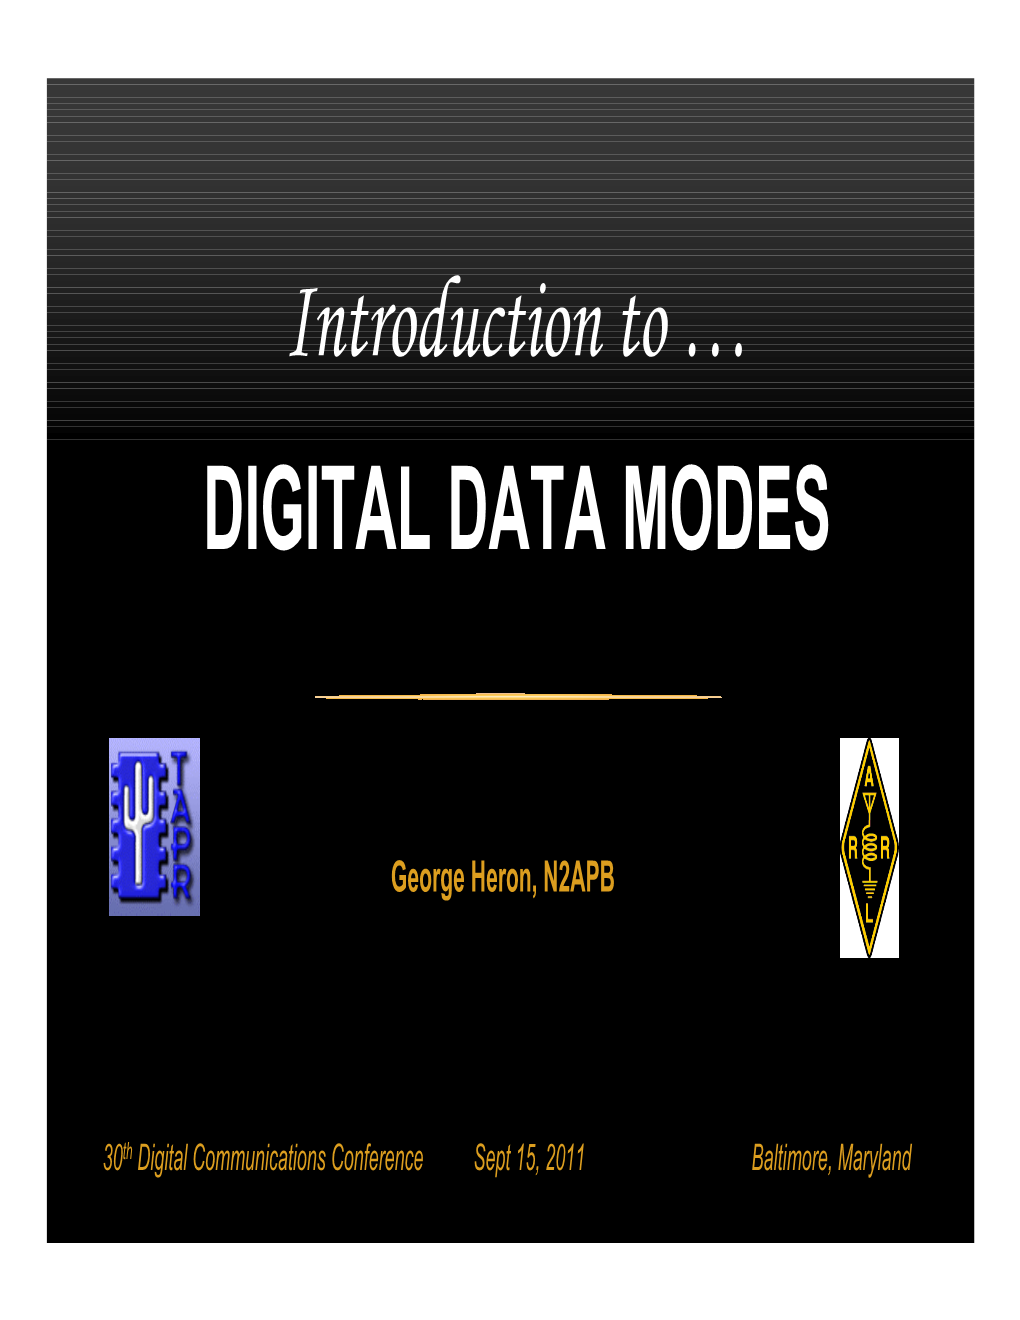 Digital Data Modes